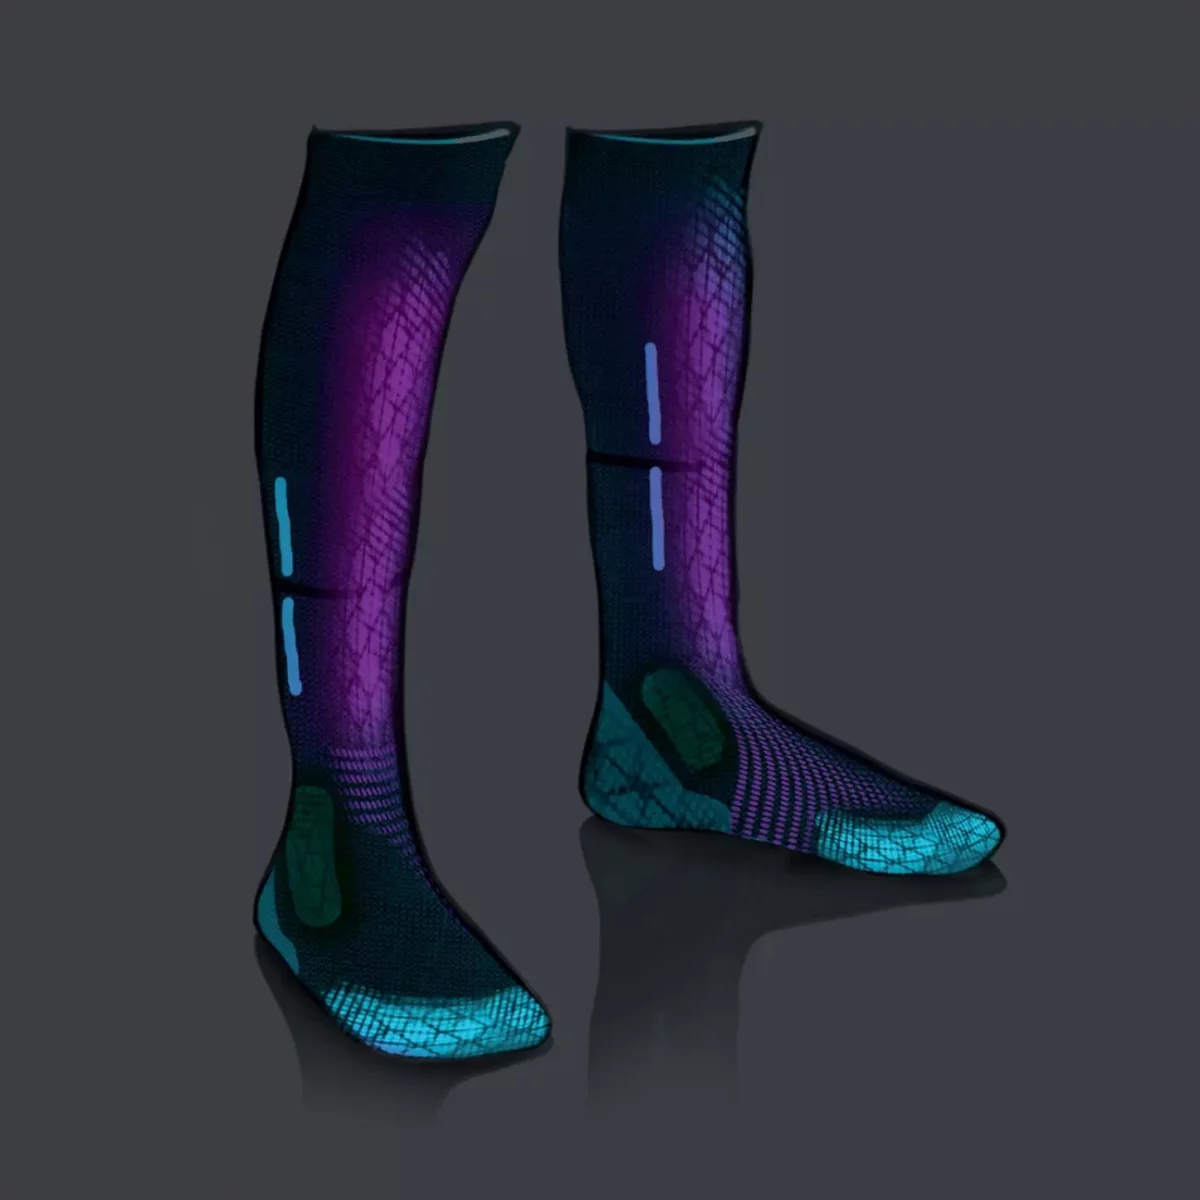 Apparel design concept sketch of UYN socks